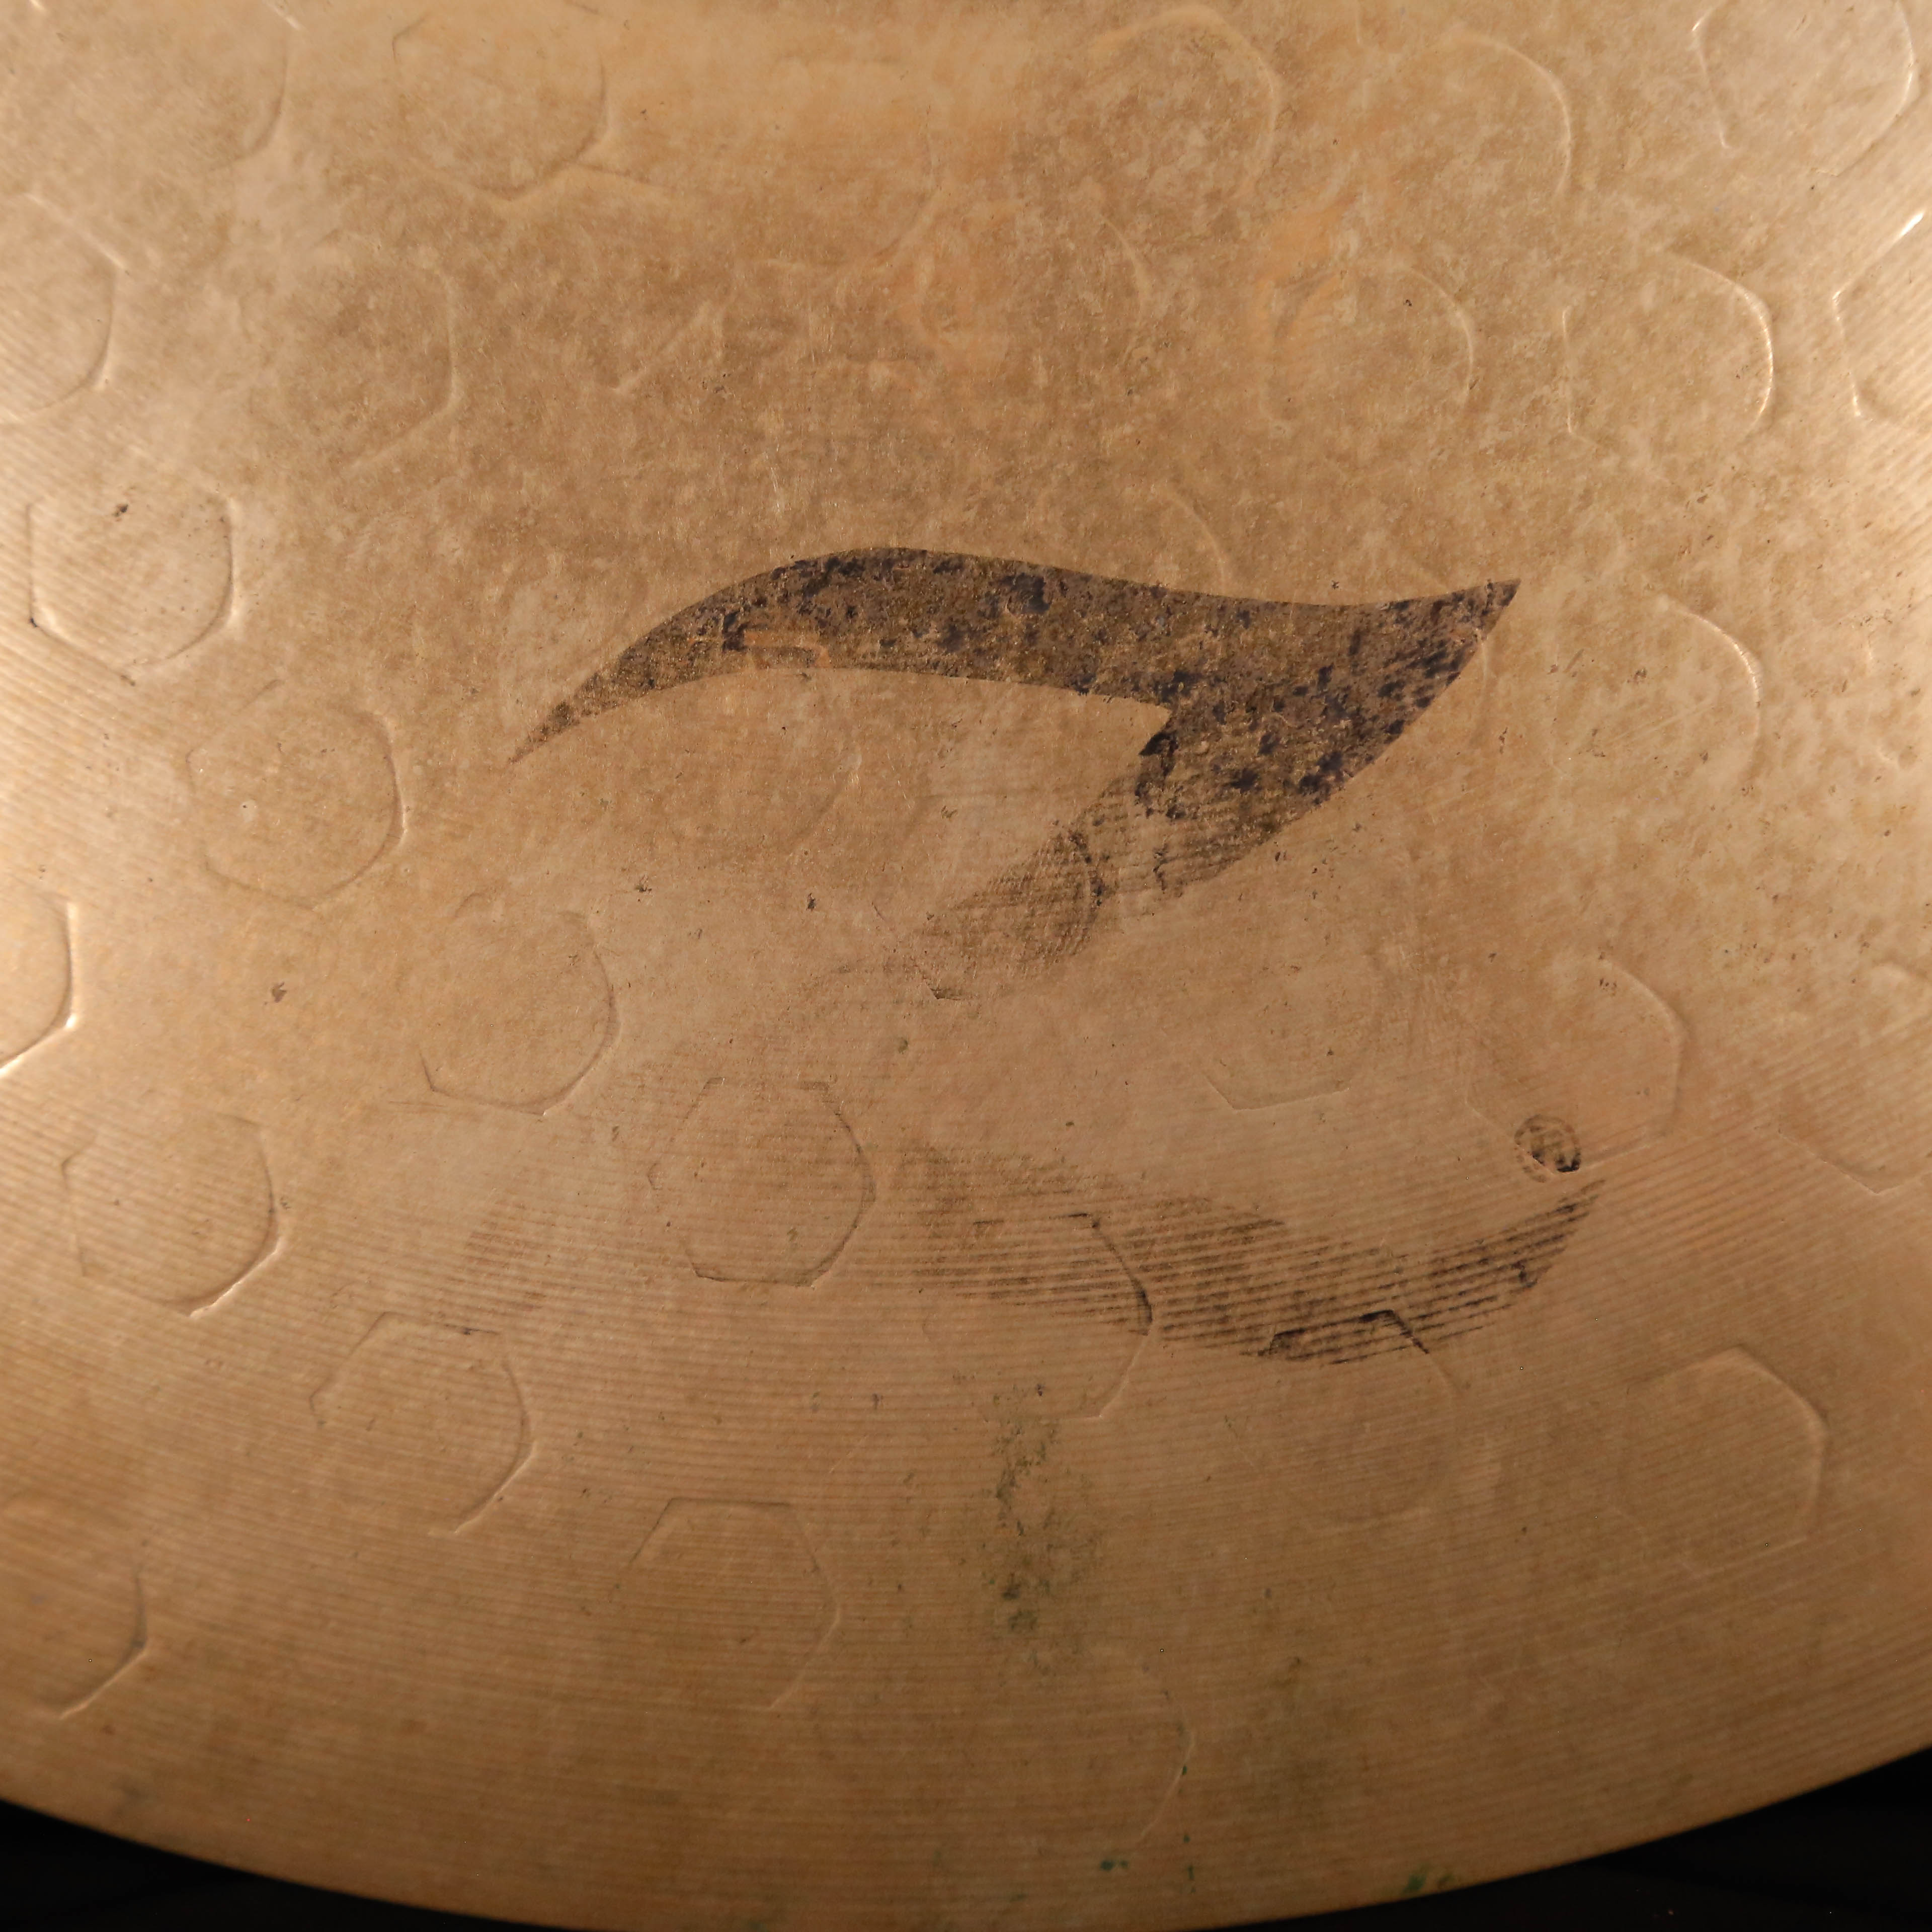 Zildjian 20'' Z Custom Power Ride Cymbal